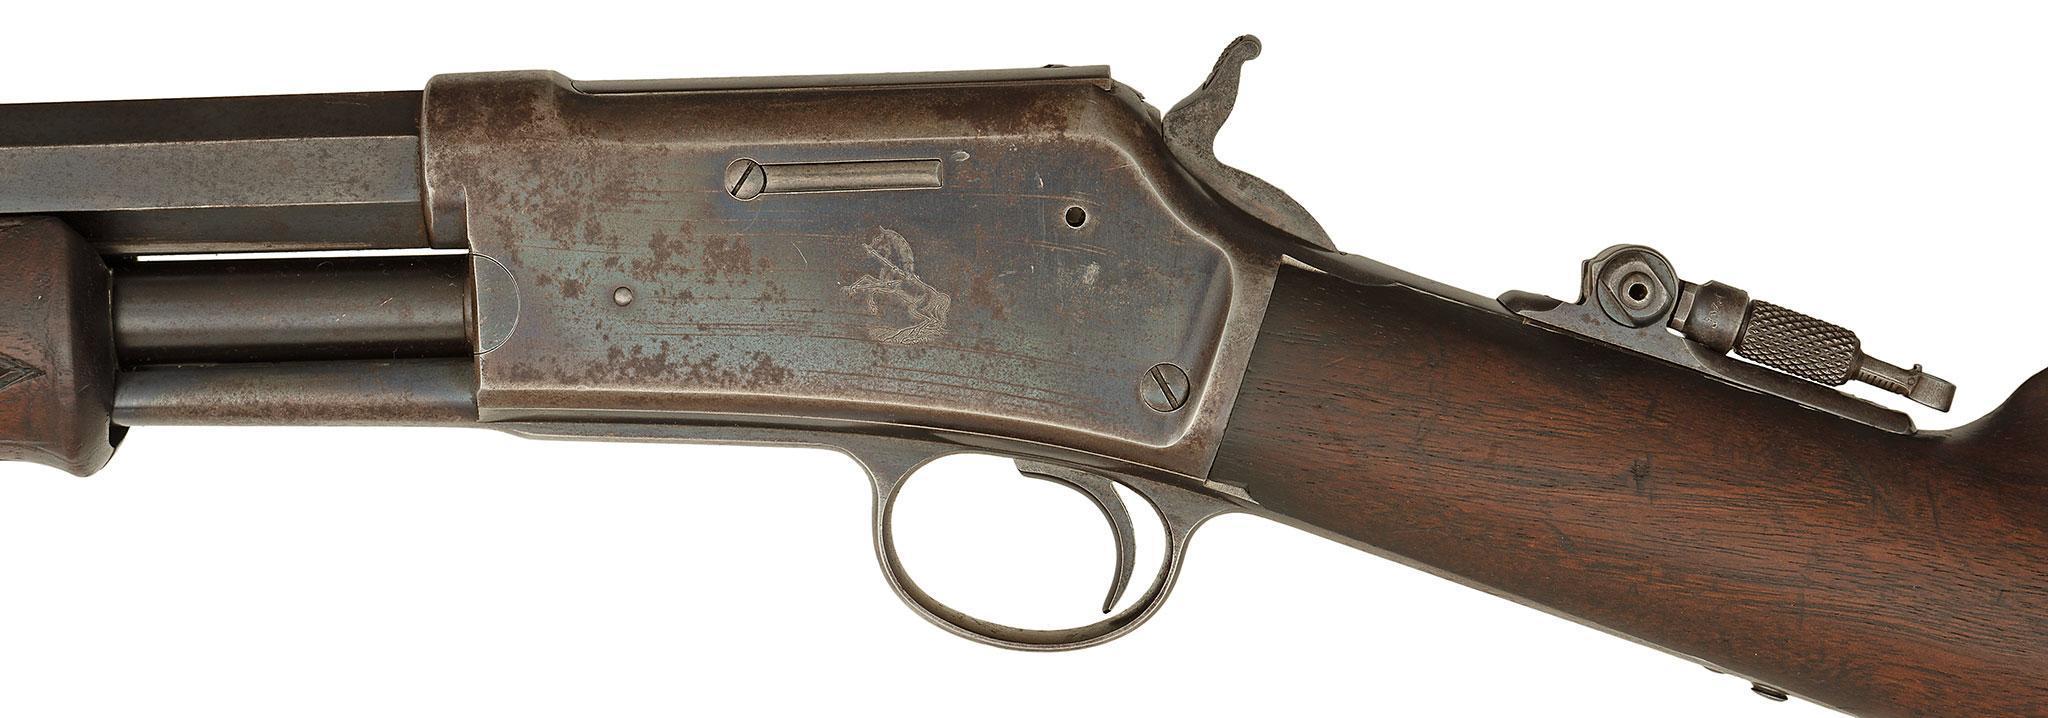 Colt Magazine Lighting Rifle